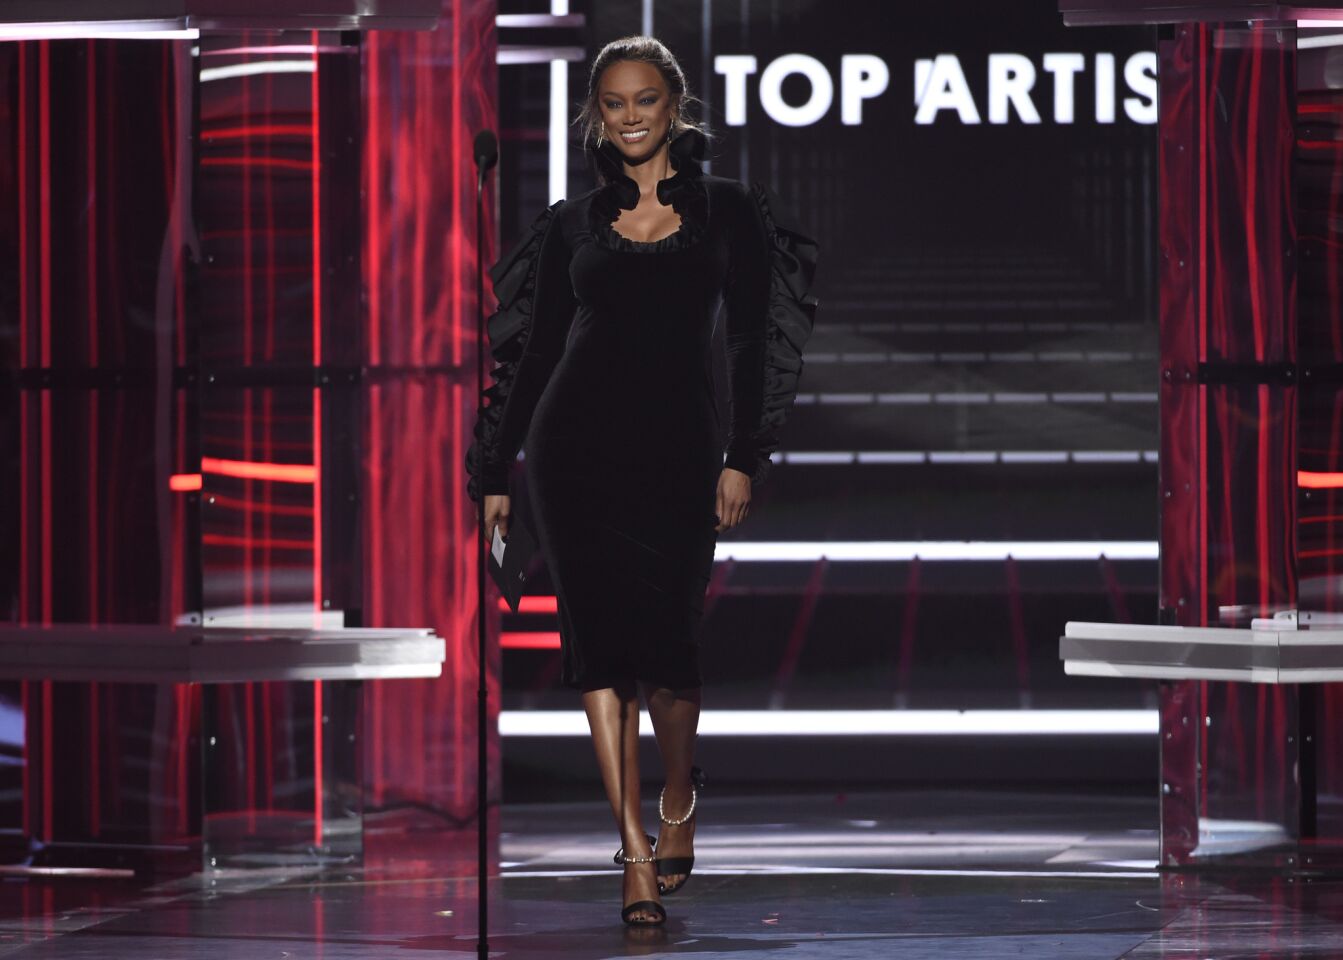 Tyra Banks walks out to present the top artist award at the Billboard Music Awards at the MGM Grand Garden Arena. (Ed Sheeran won.)